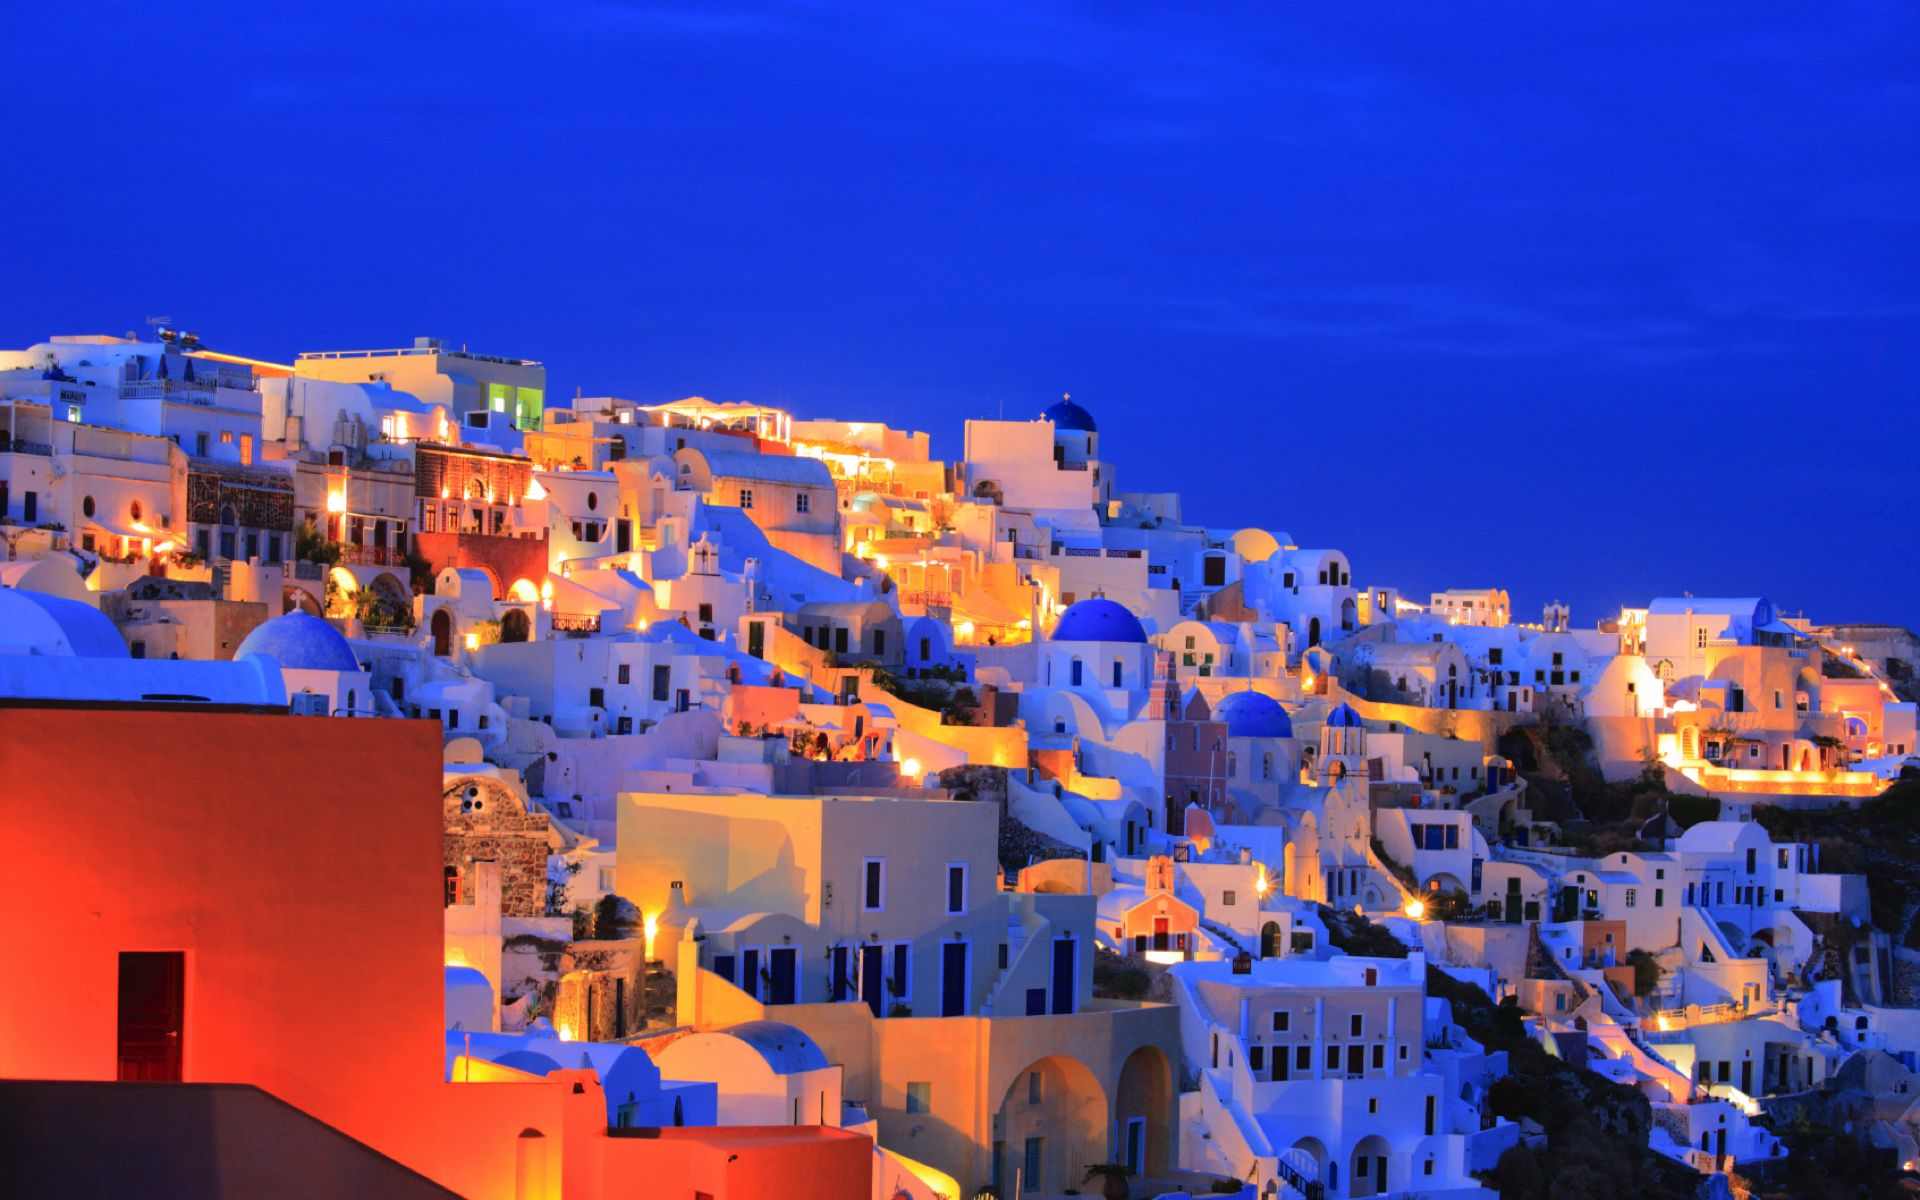 Santorini is a Grecian island located in the southern Aegean Sea